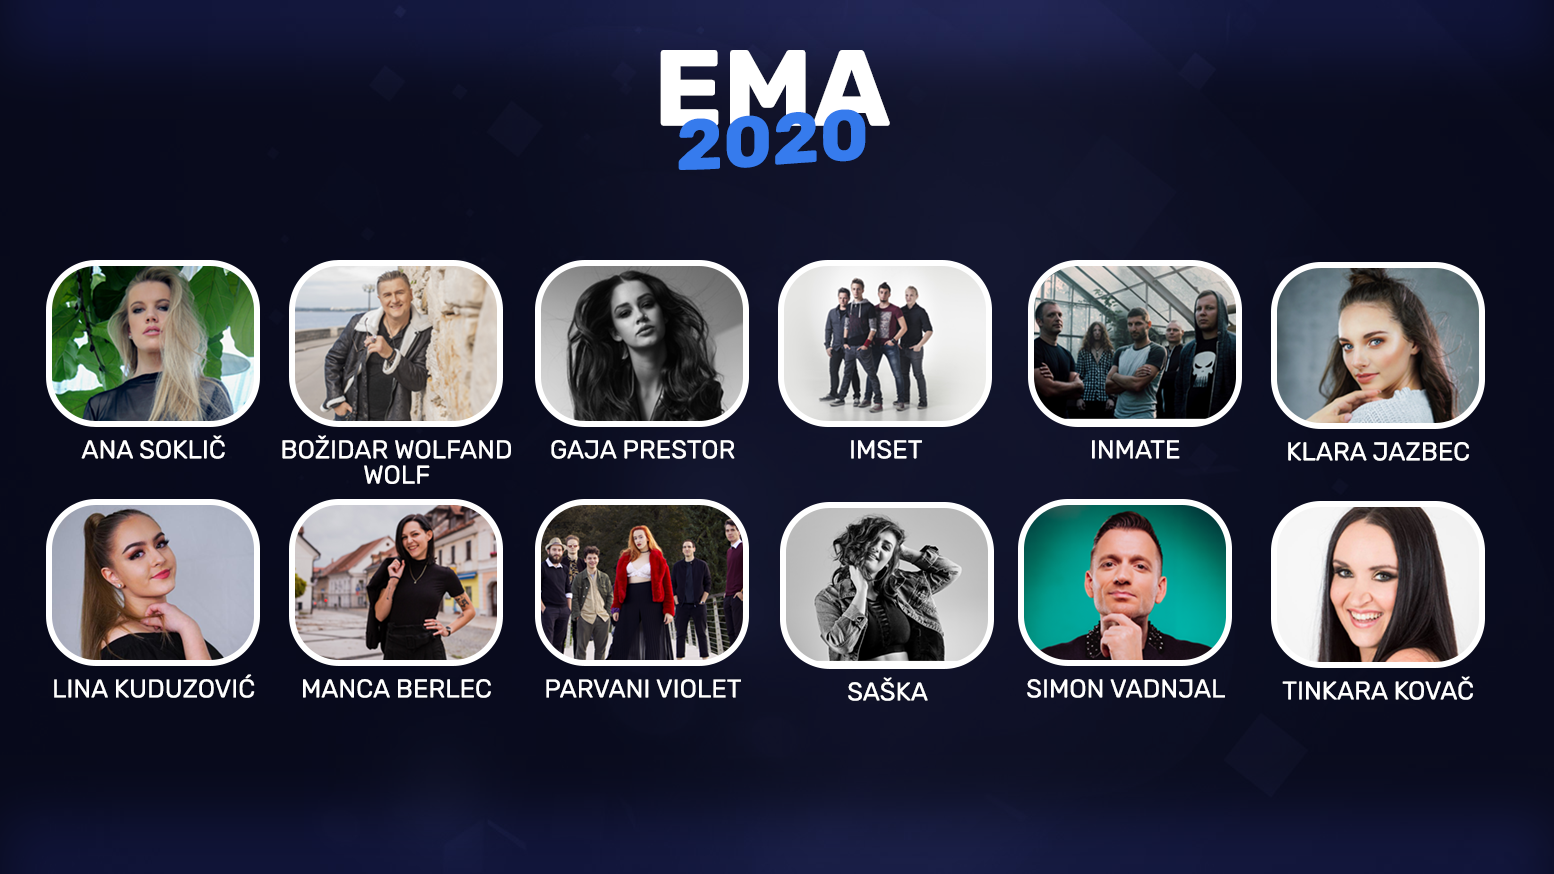 Tonight: Slovenia selects Eurovision 2020 representative